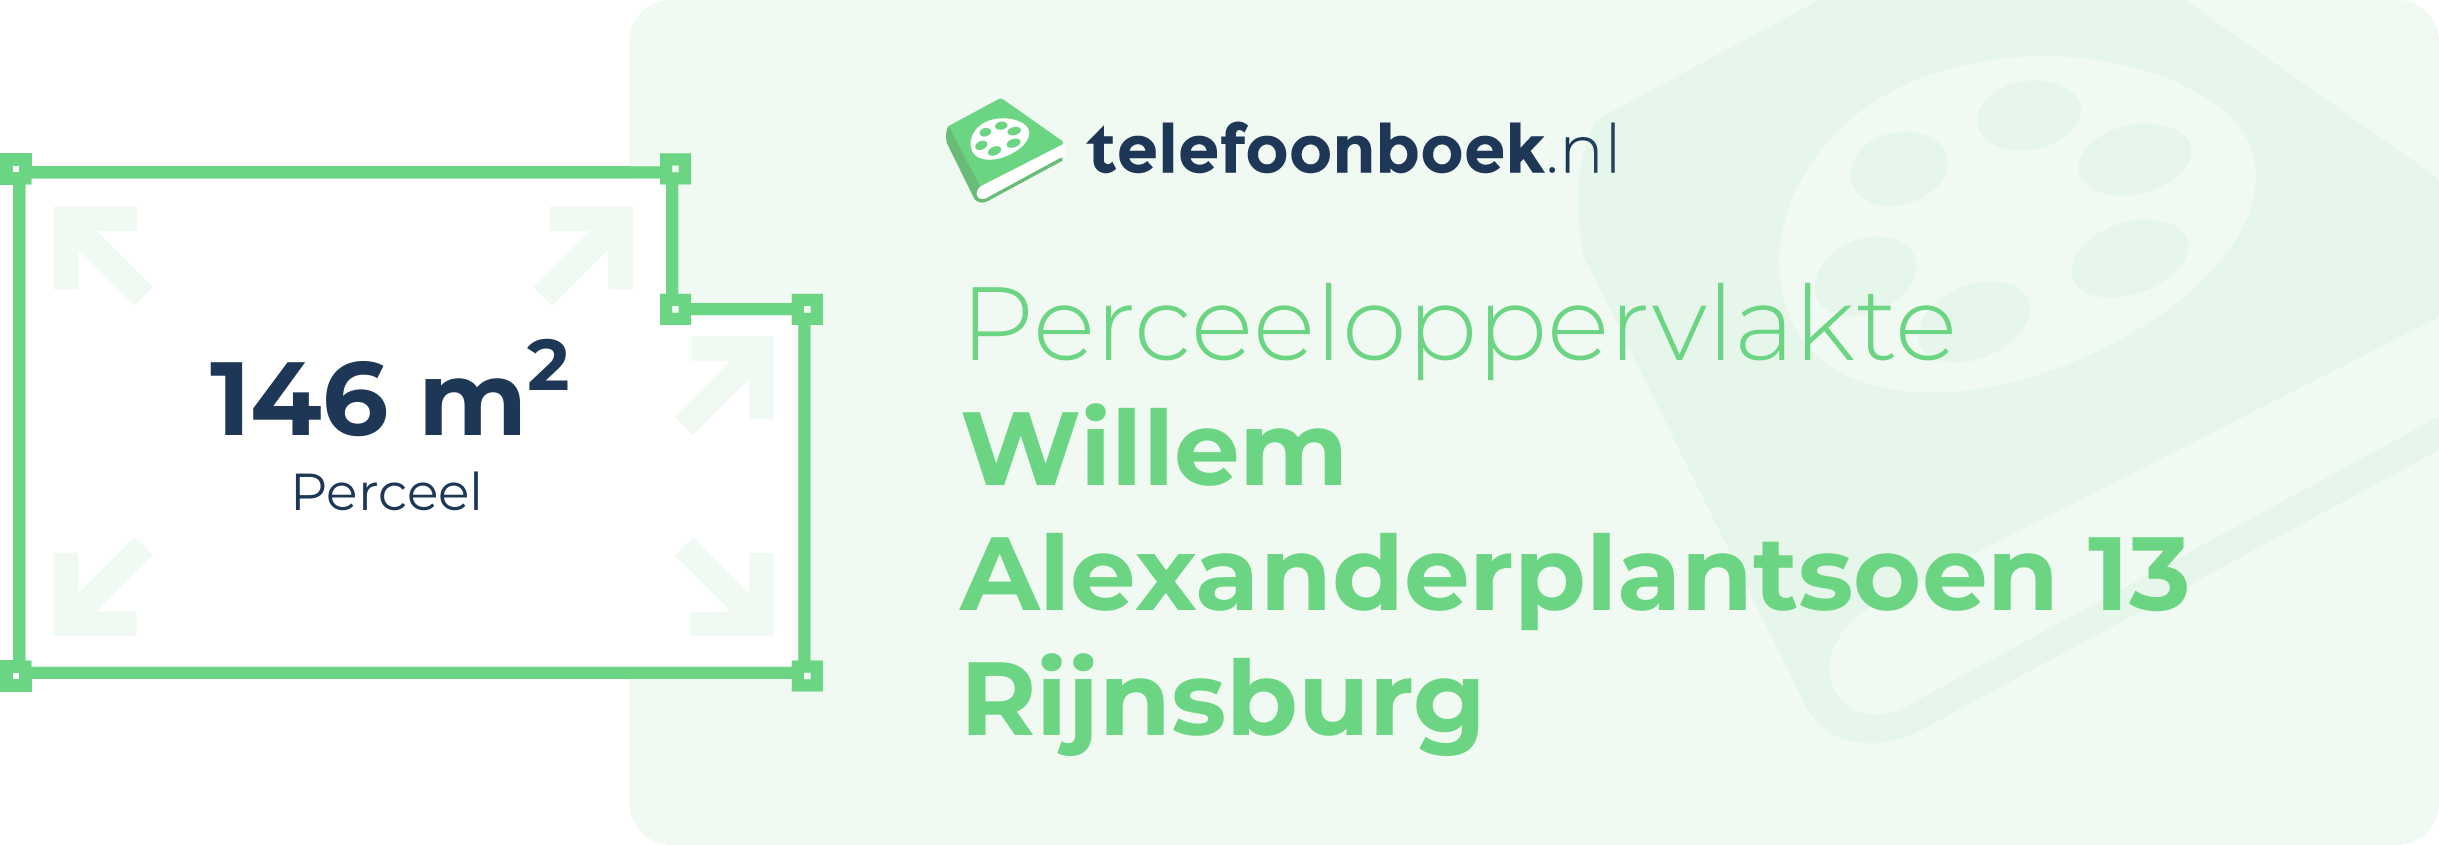 Perceeloppervlakte Willem Alexanderplantsoen 13 Rijnsburg